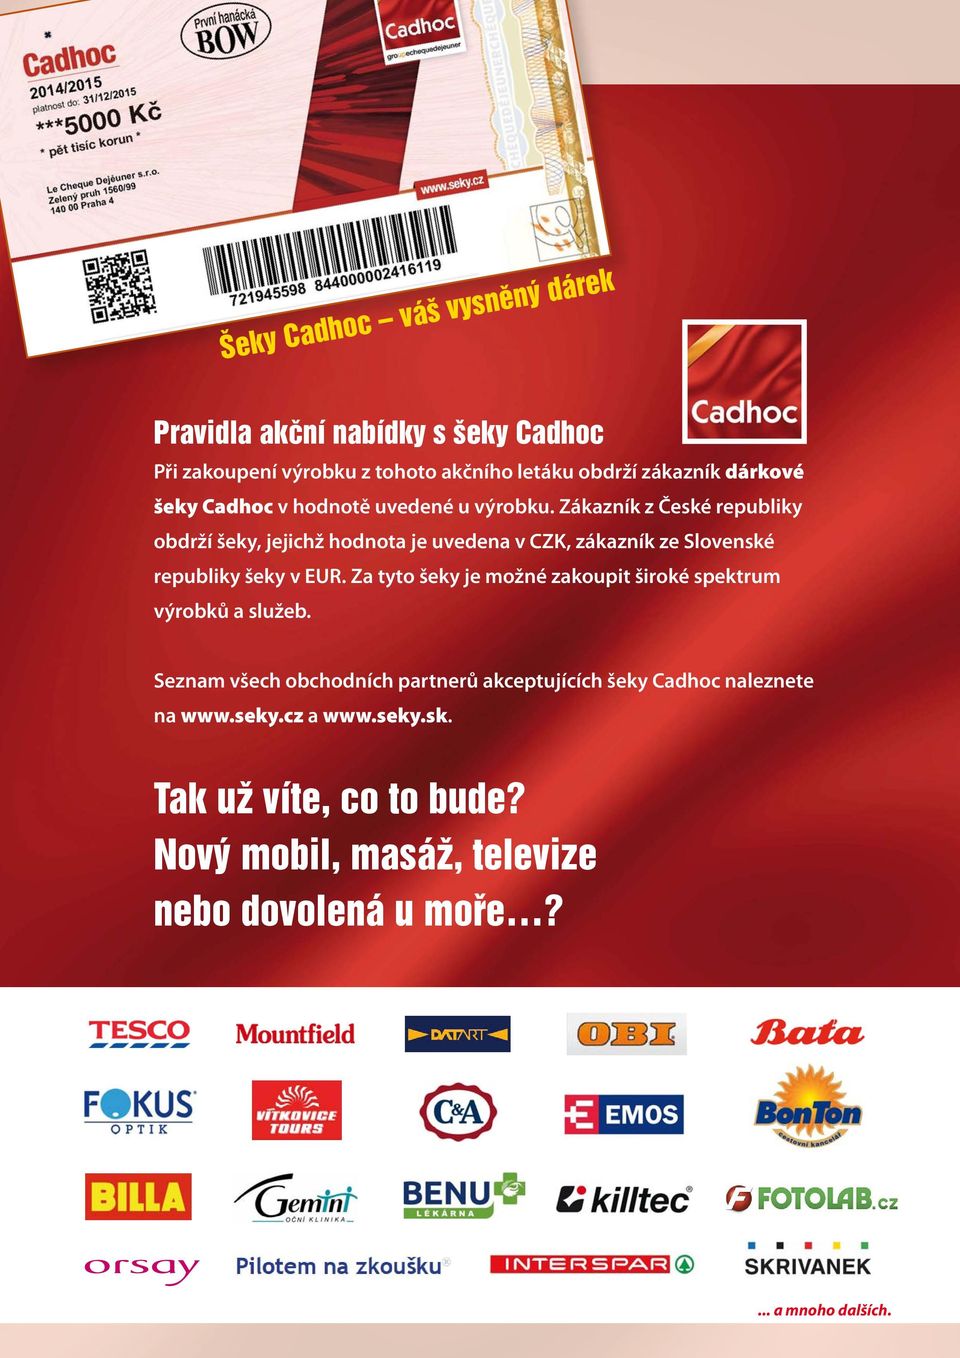 Zákazník z České republiky obdrží šeky, jejichž hodnota je uvedena v CZK, zákazník ze Slovenské republiky šeky v EUR.